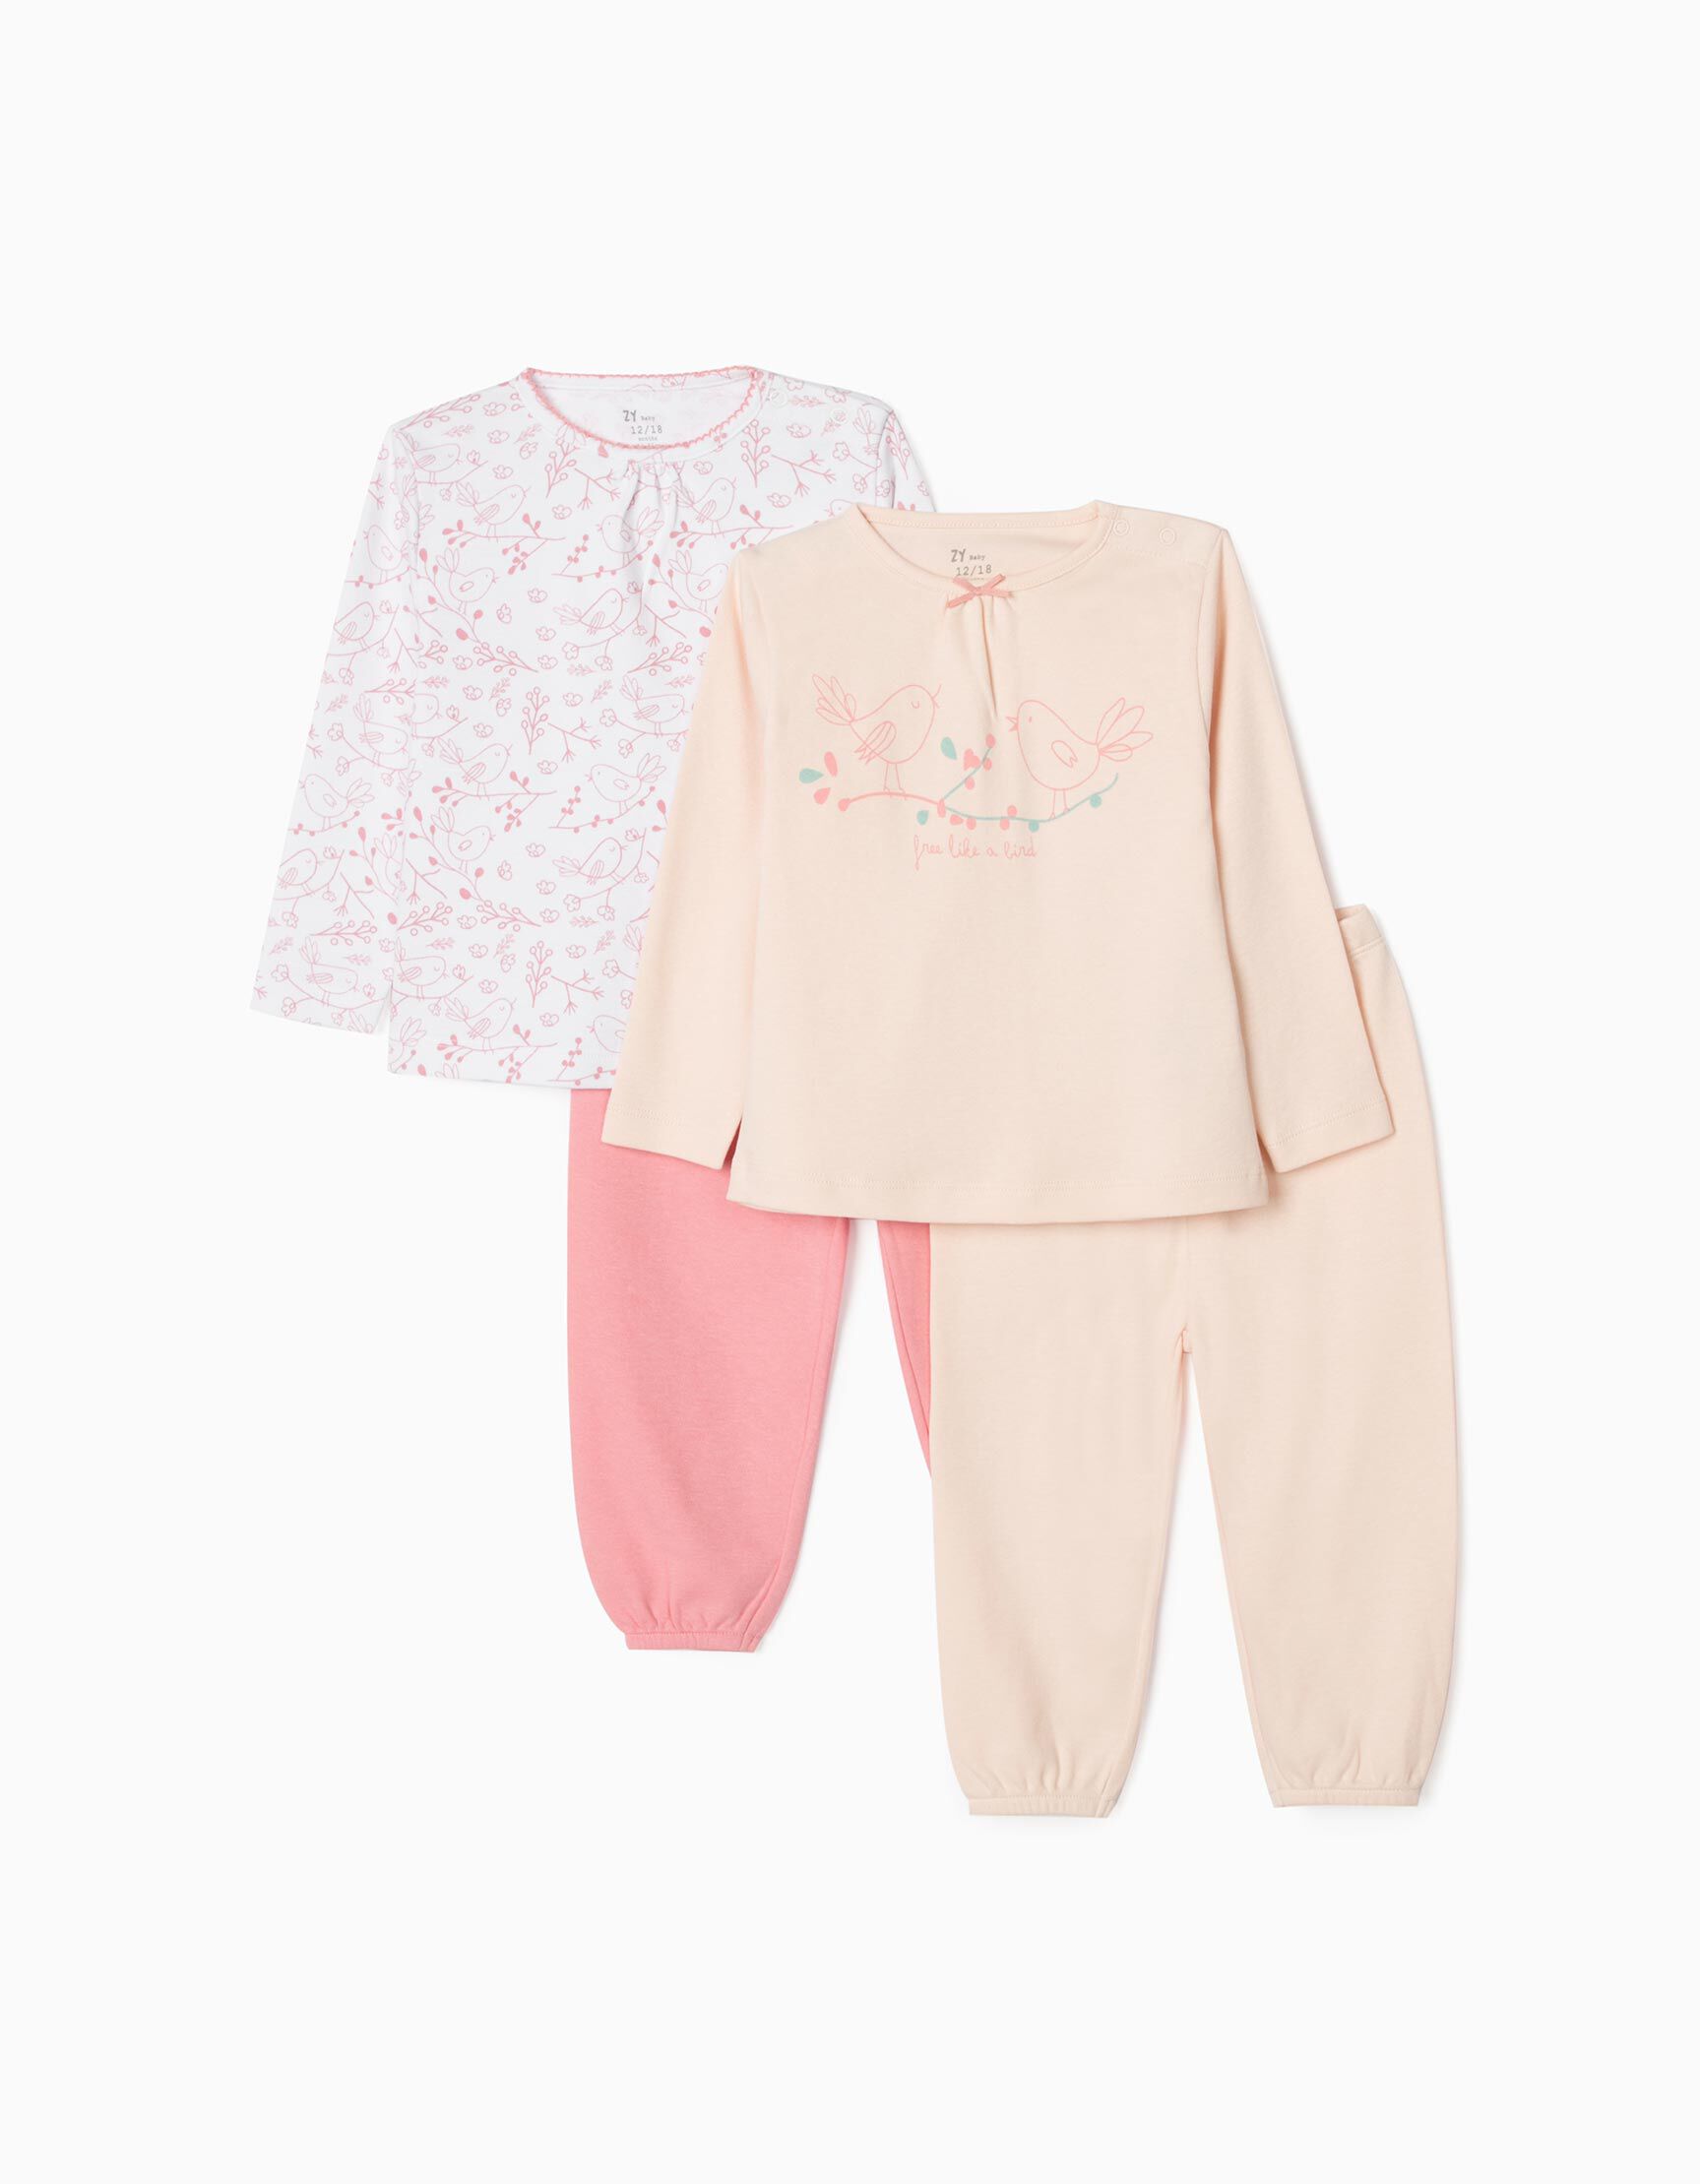 Pyjama  bodysuit Baby Dior Pink size 1 mois  jusquà 55cm FR in Polyester   31352482